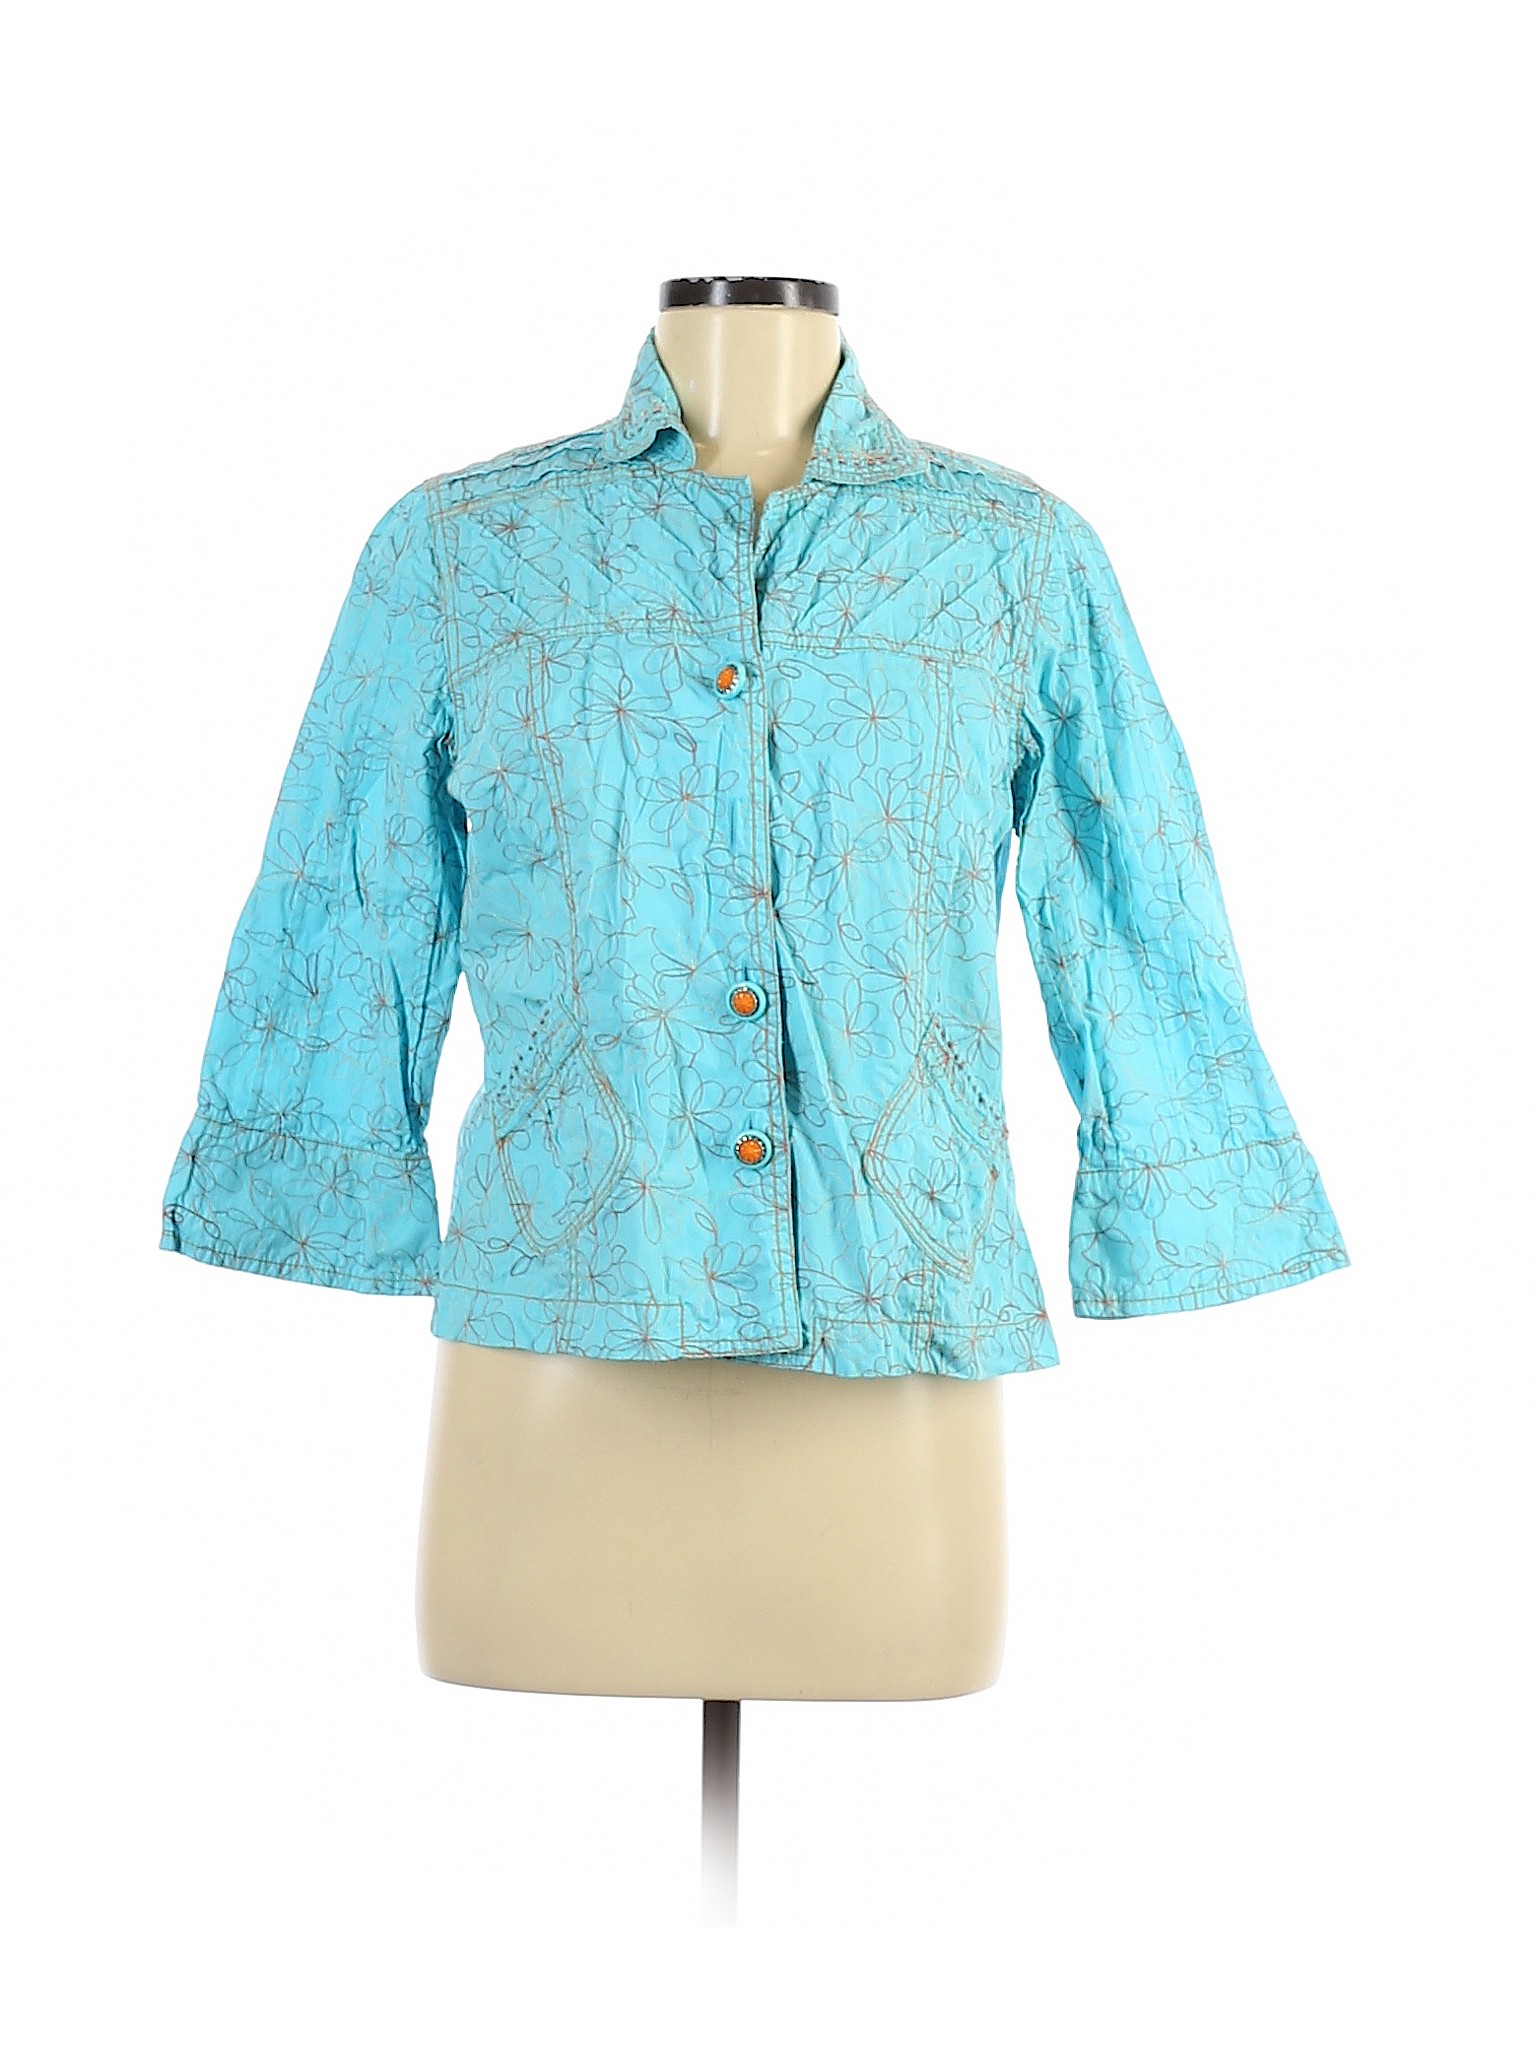 Yak Magik Women Blue Jacket M | eBay